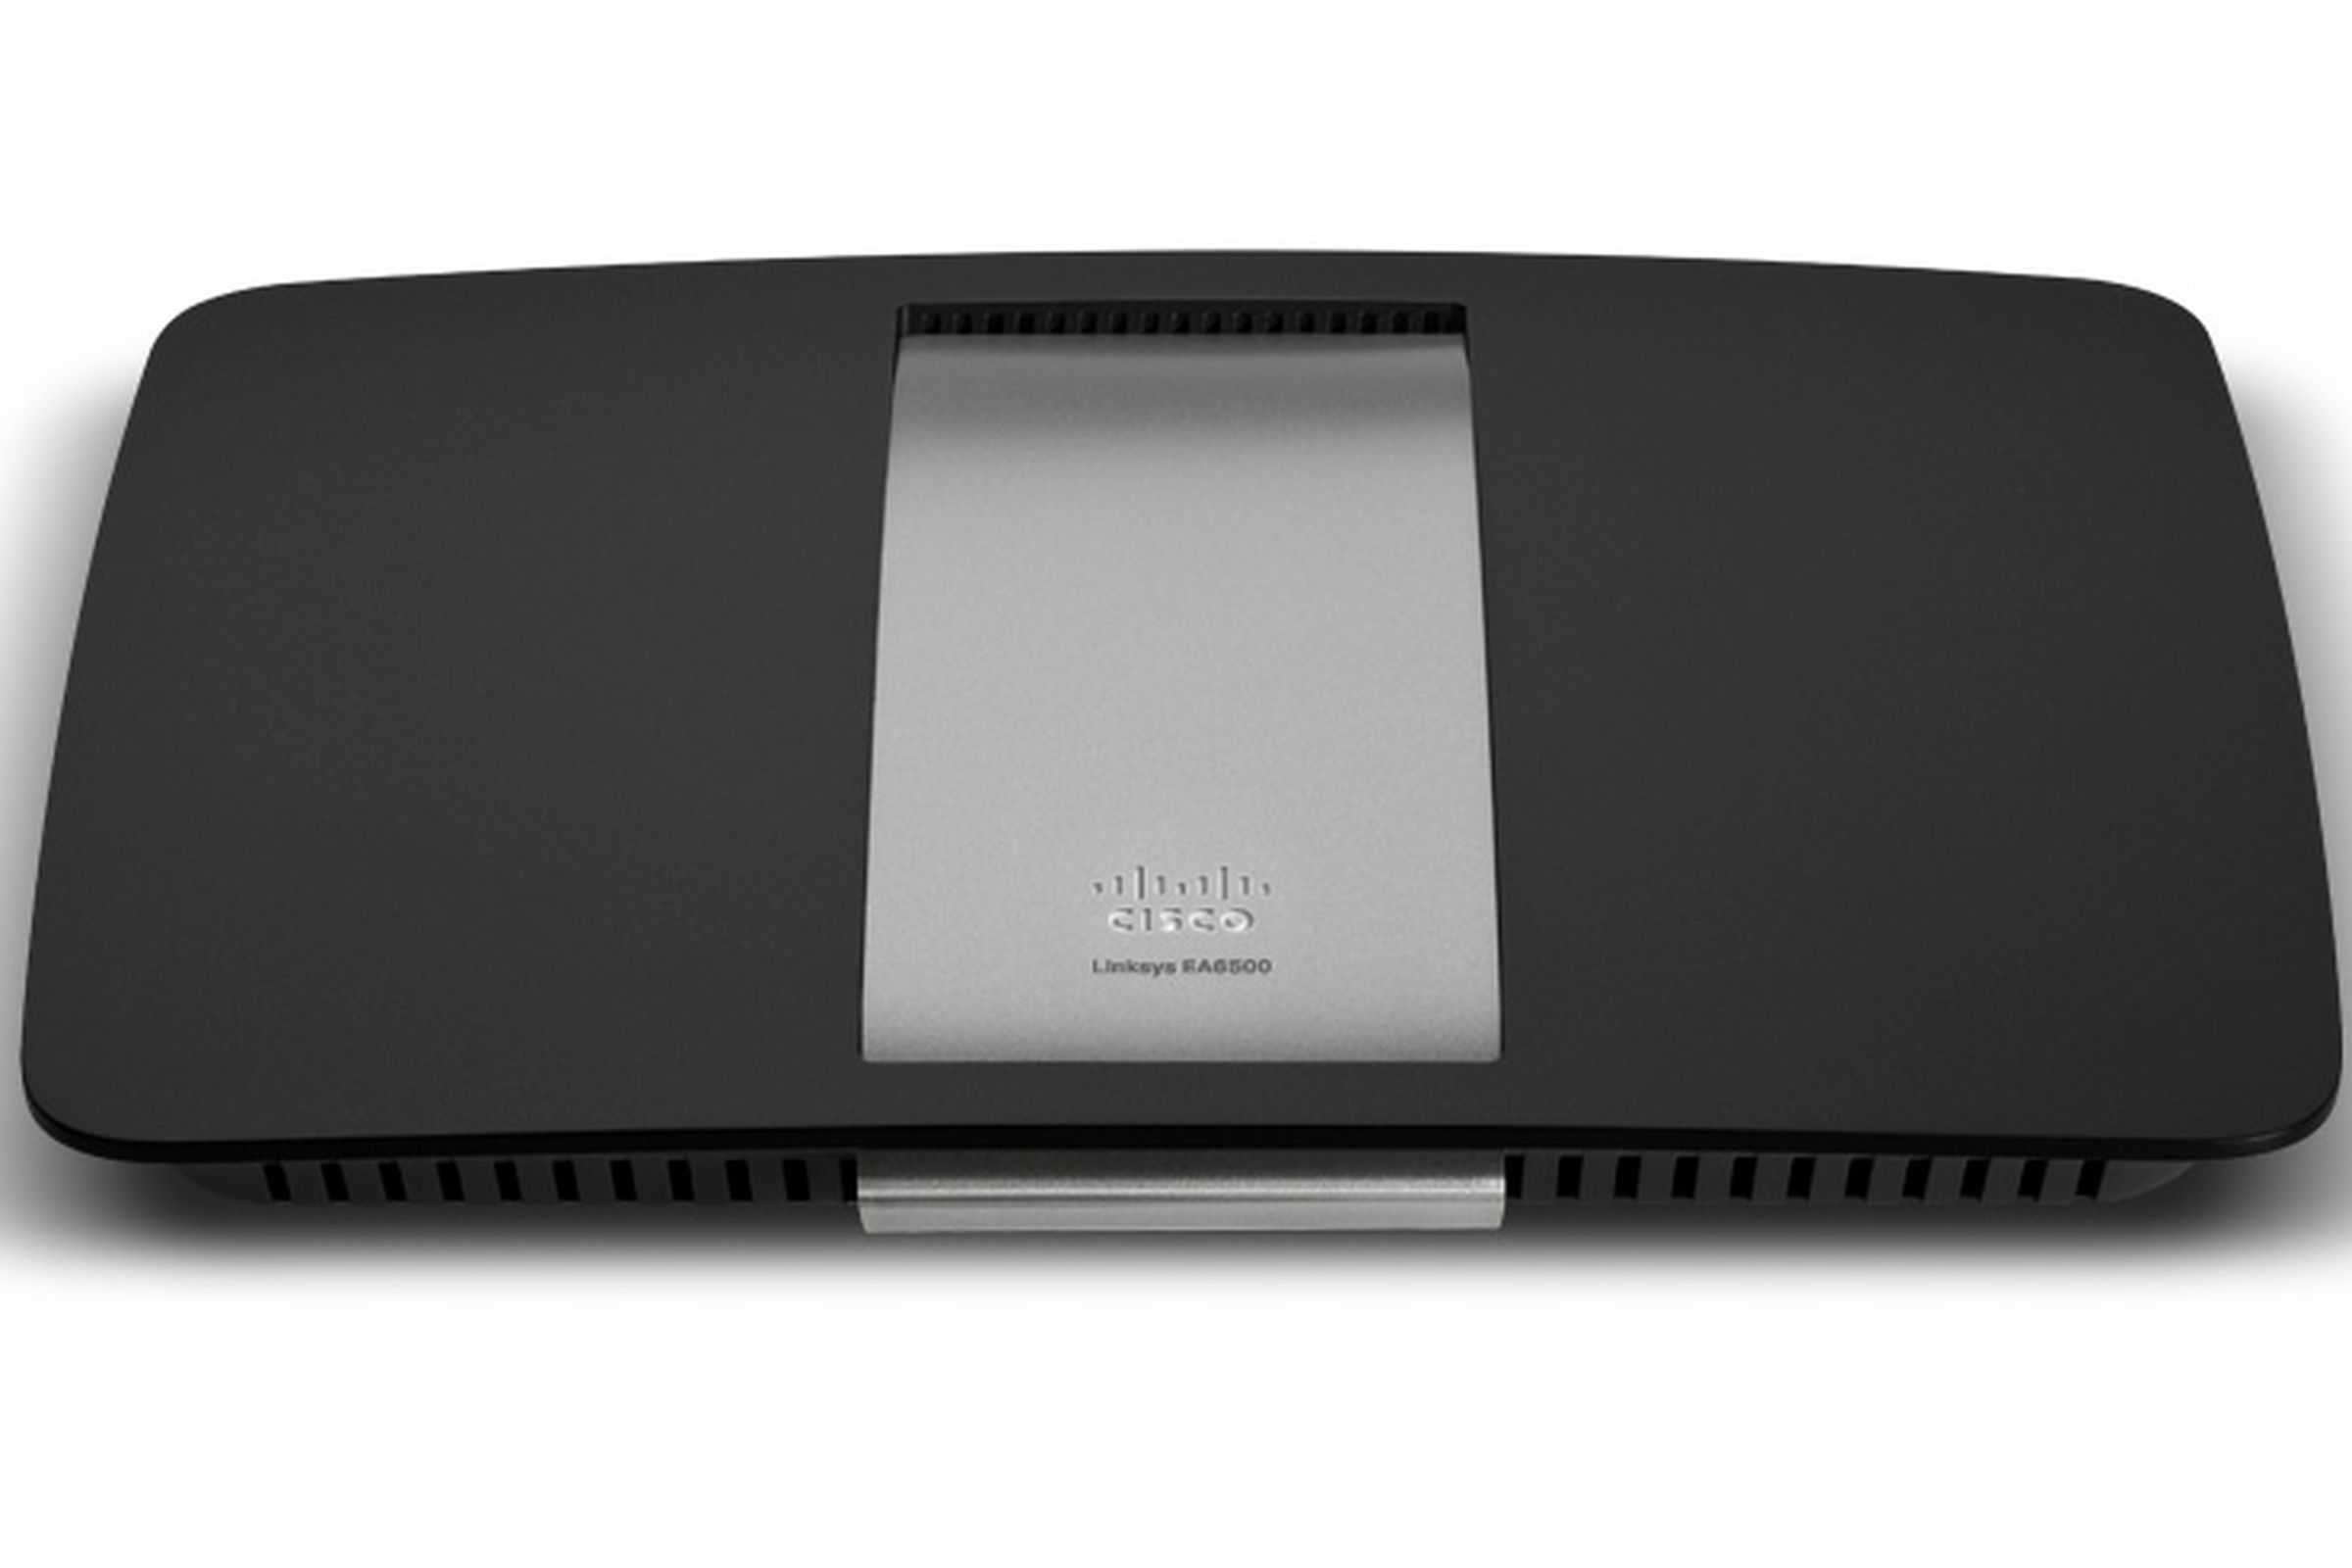 Cisco Linksys EA6500